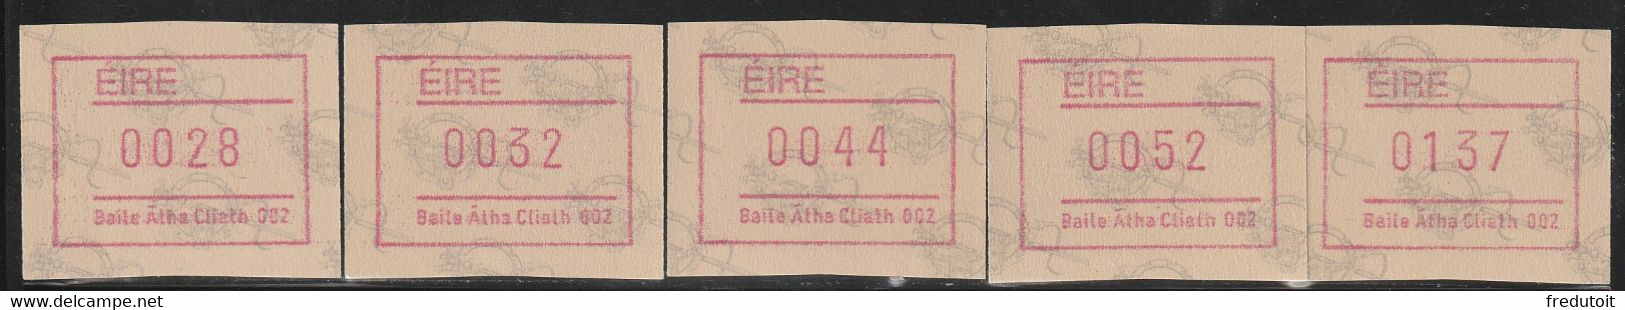 IRLANDE - Timbres Distributeurs / FRAMA  ATM - N°4** (1992) Baile Atha Cliath 002 - Frankeervignetten (Frama)